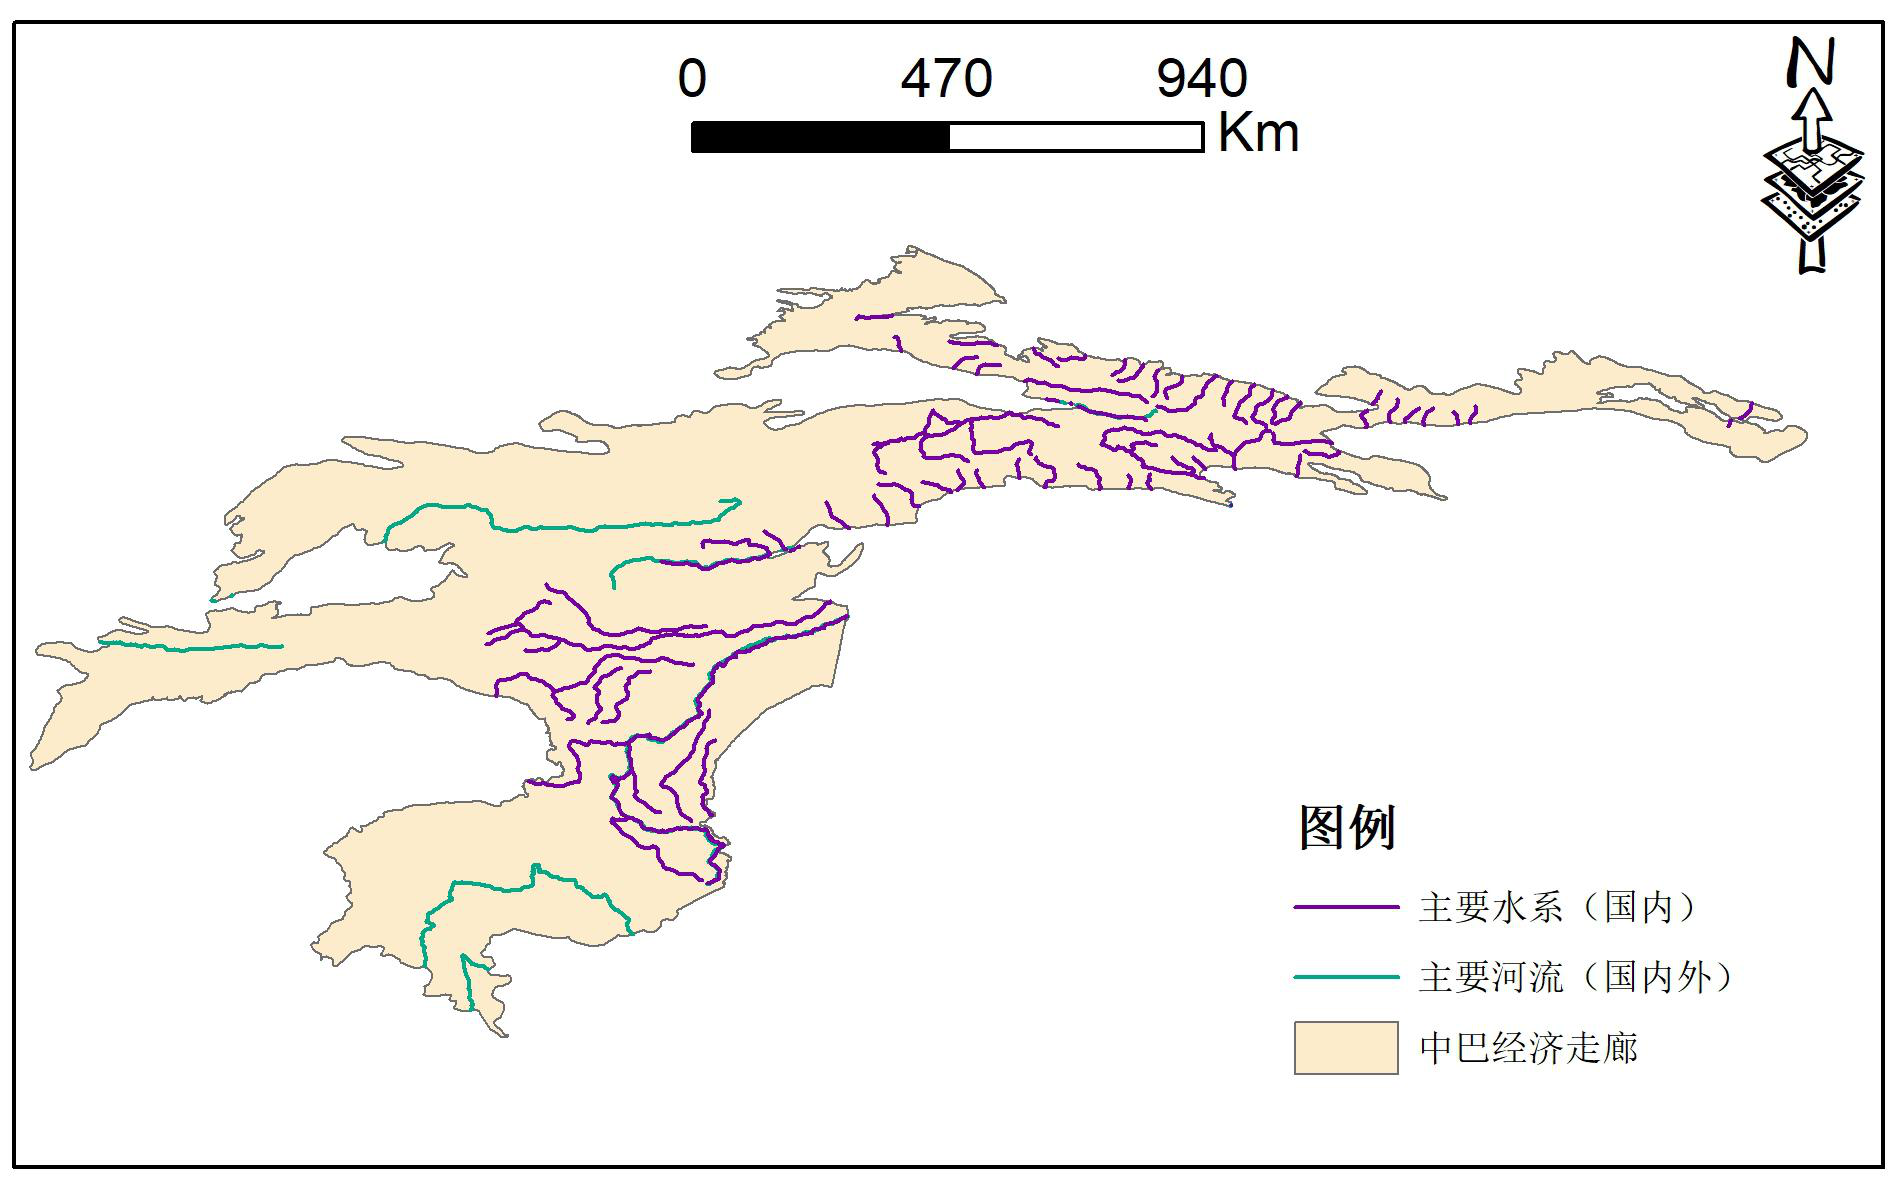 China Pakistan Economic Corridor and main water systems of Tianshan Mountains (1989)